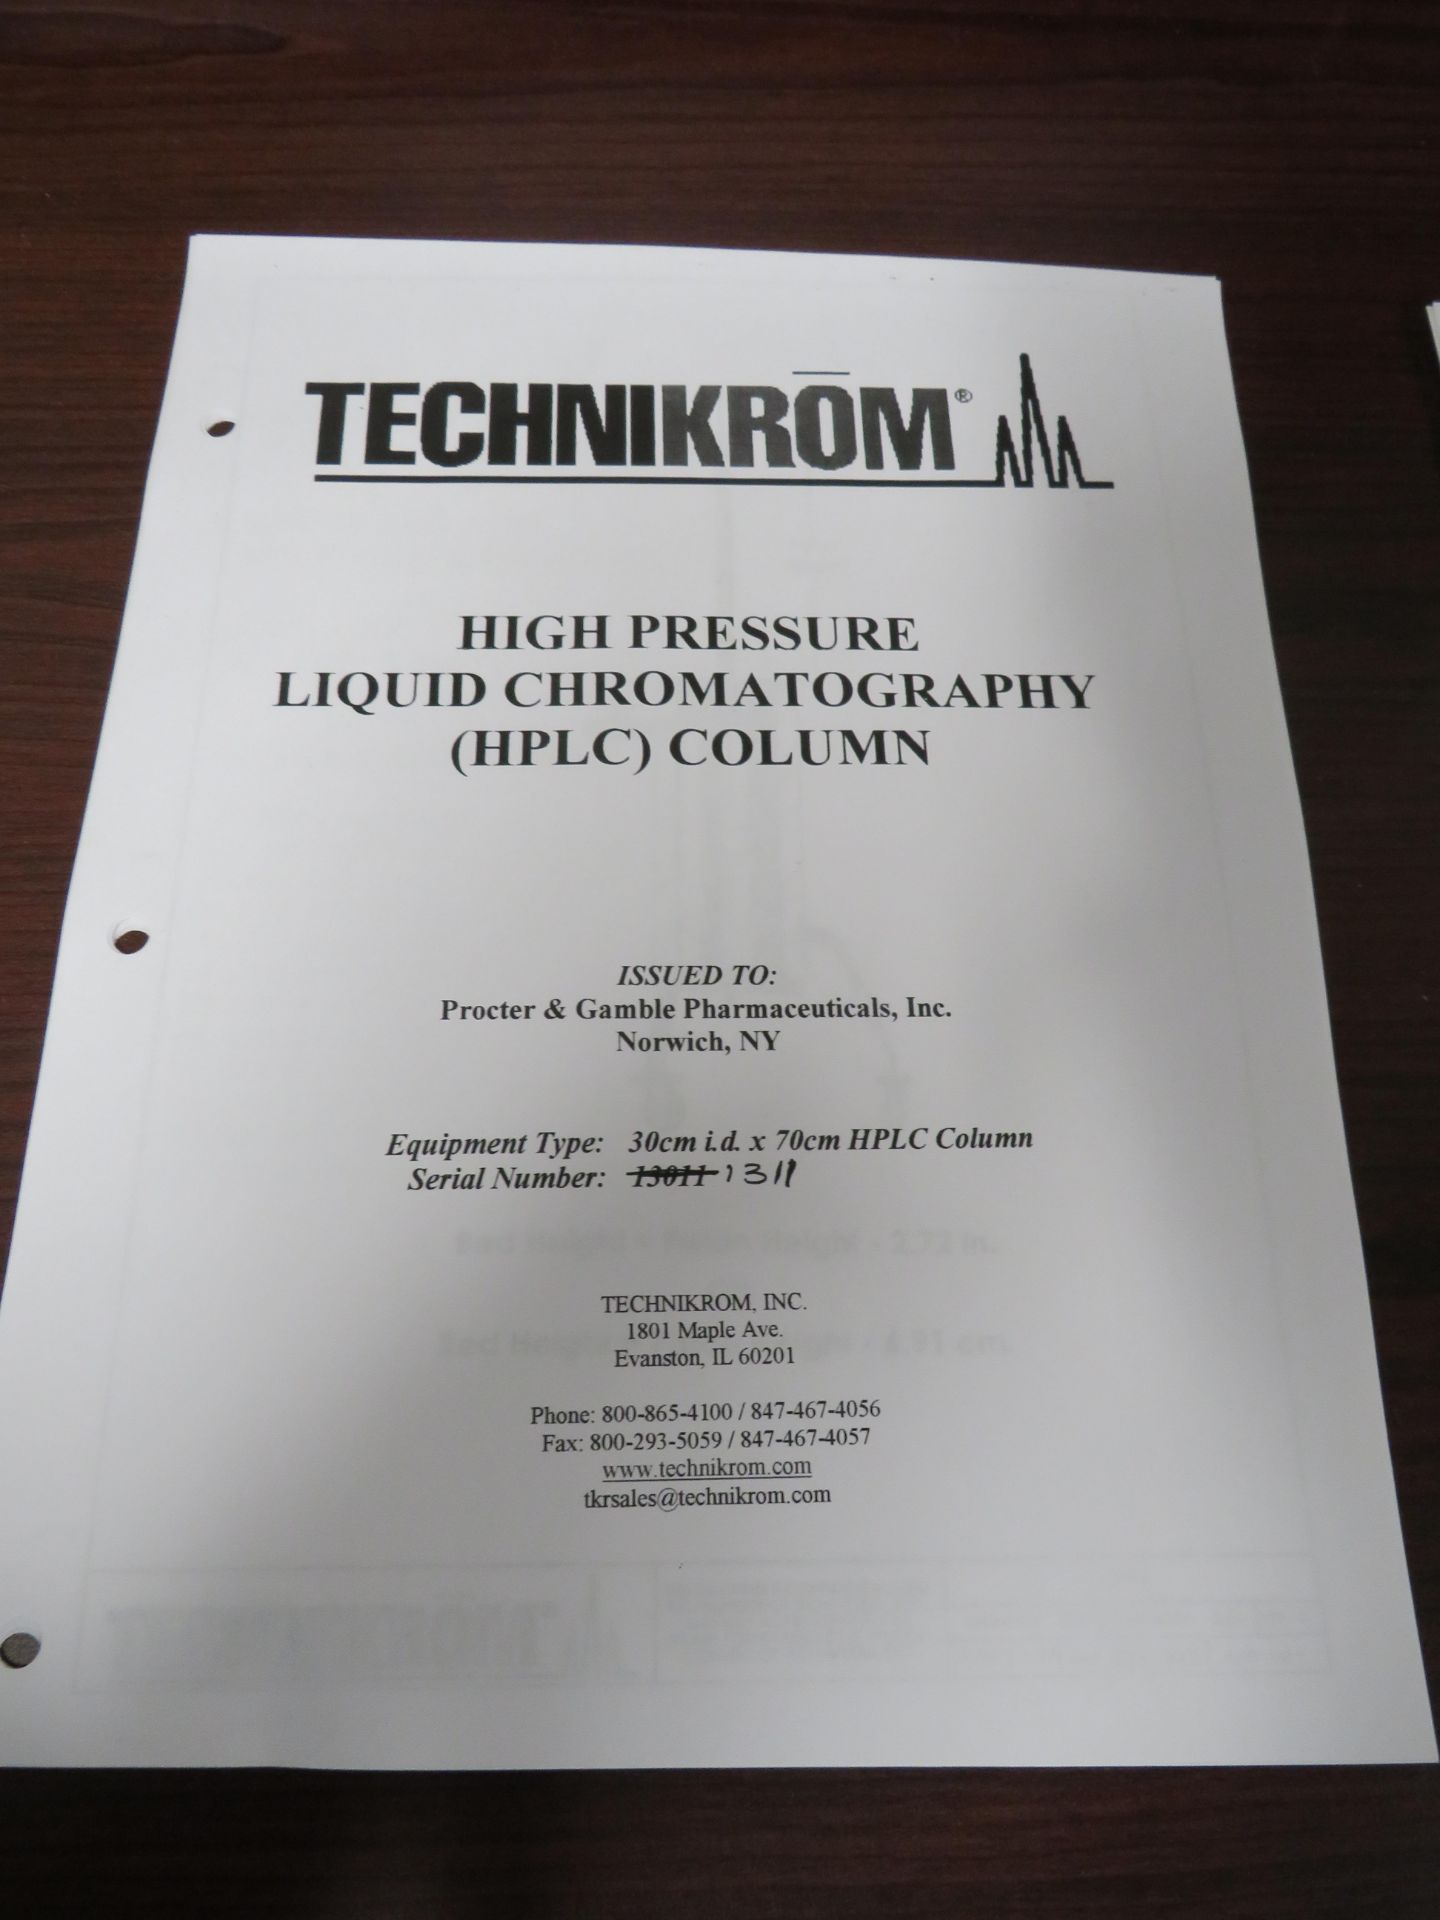 Used Technikrom High Pressure Liquid Chromatography Column HPLC - Image 2 of 4